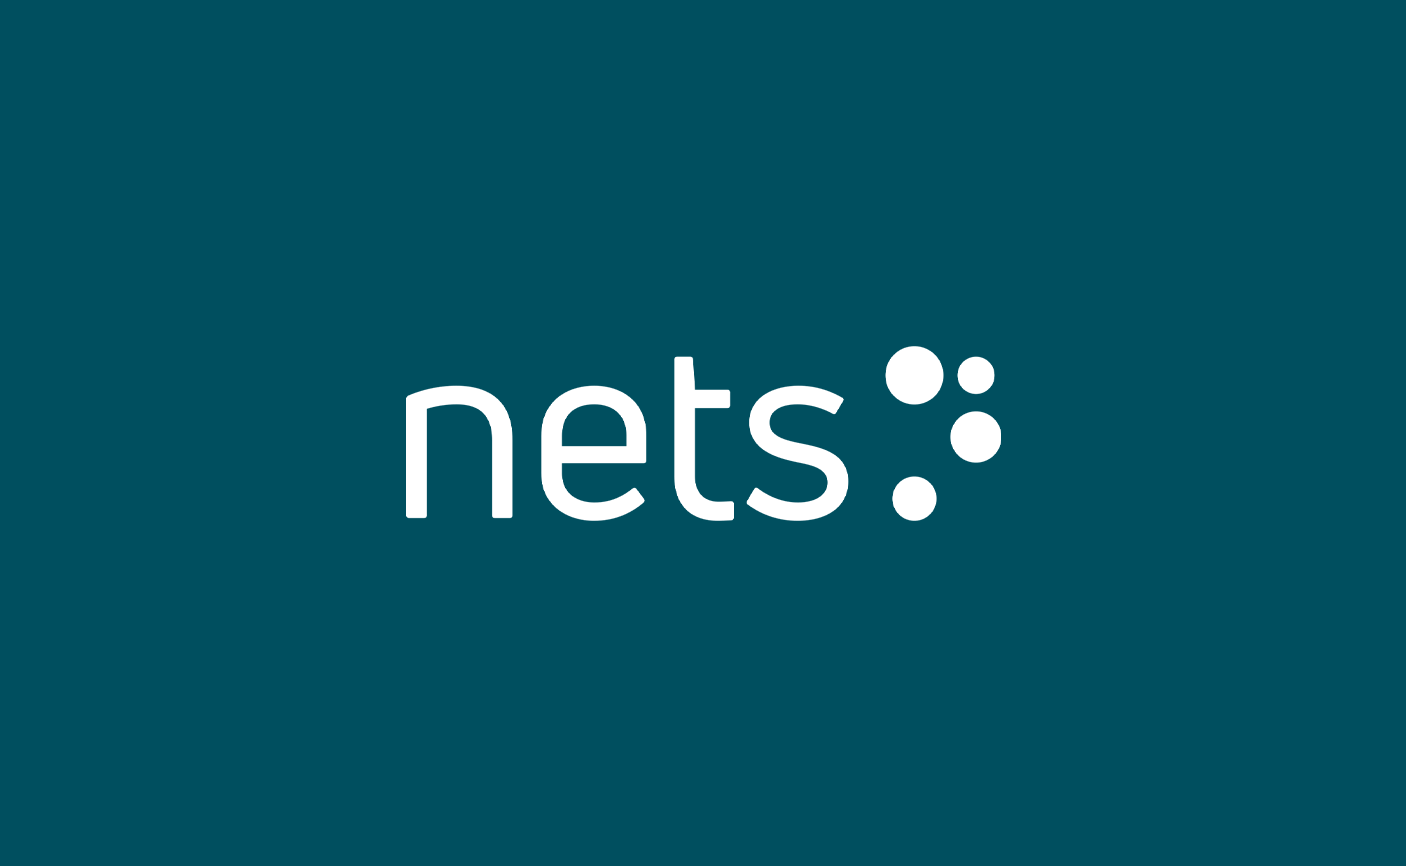 Nets - customer testimonial and customer reference